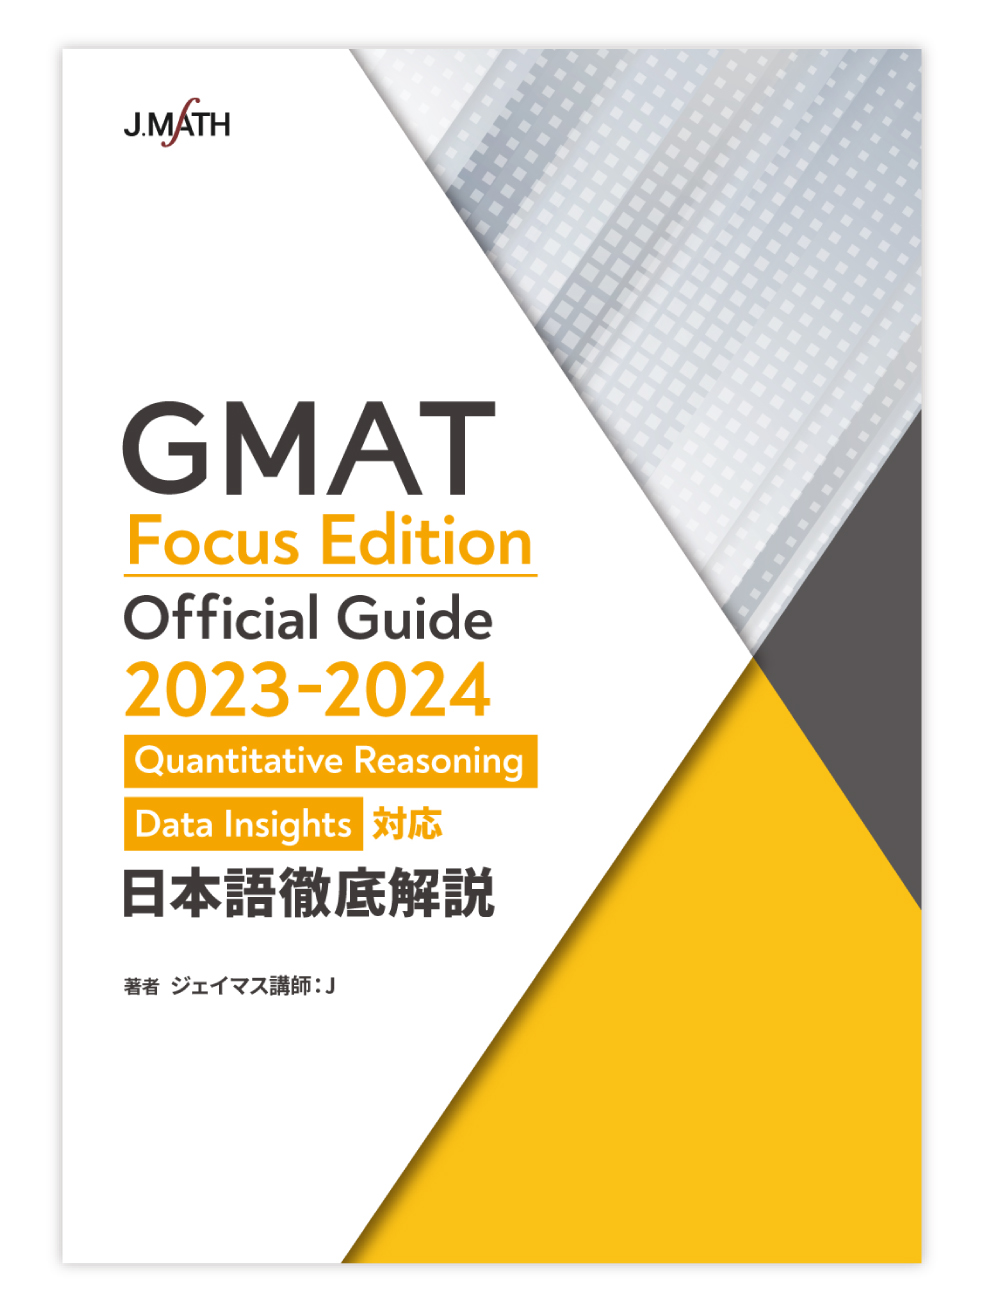 ​(3) GMAT Focus Edition Official Guide 2023-2024 日本語徹底解説画像